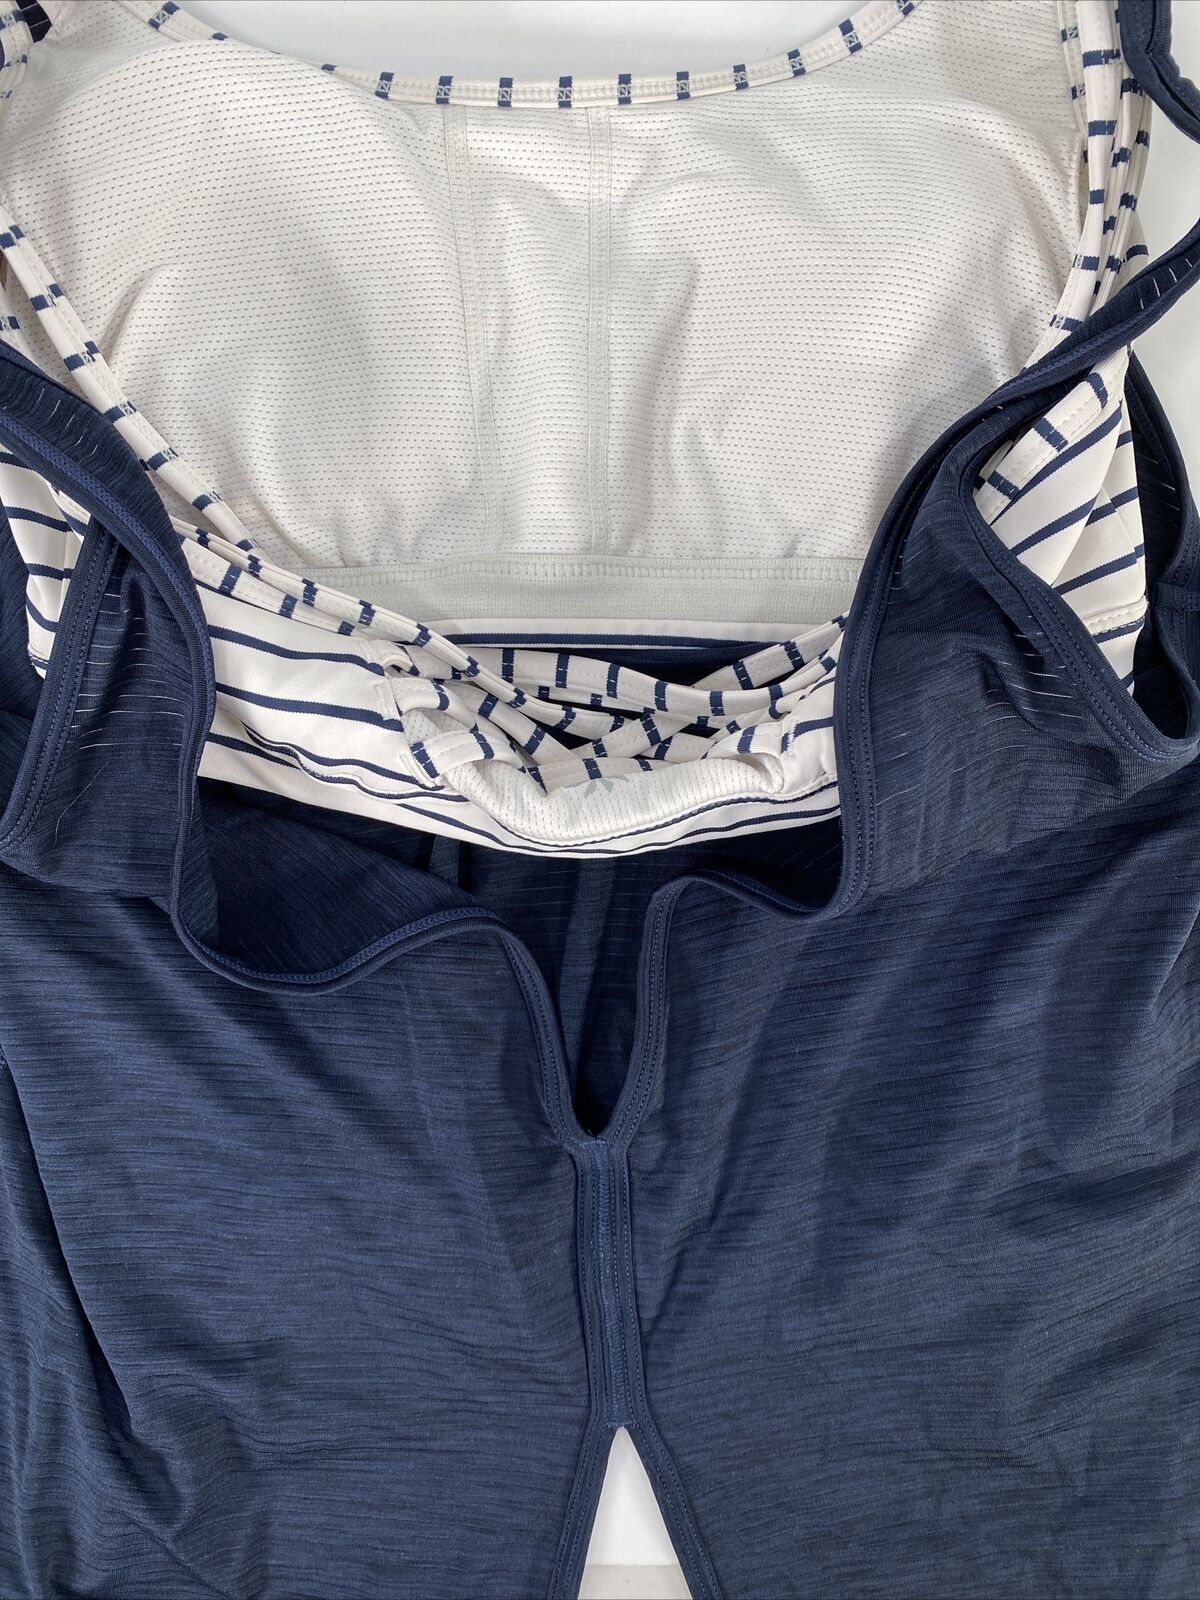 Athleta Women's Blue Tie Back Fully Focused Tank Top W/ Sports Bra - XS